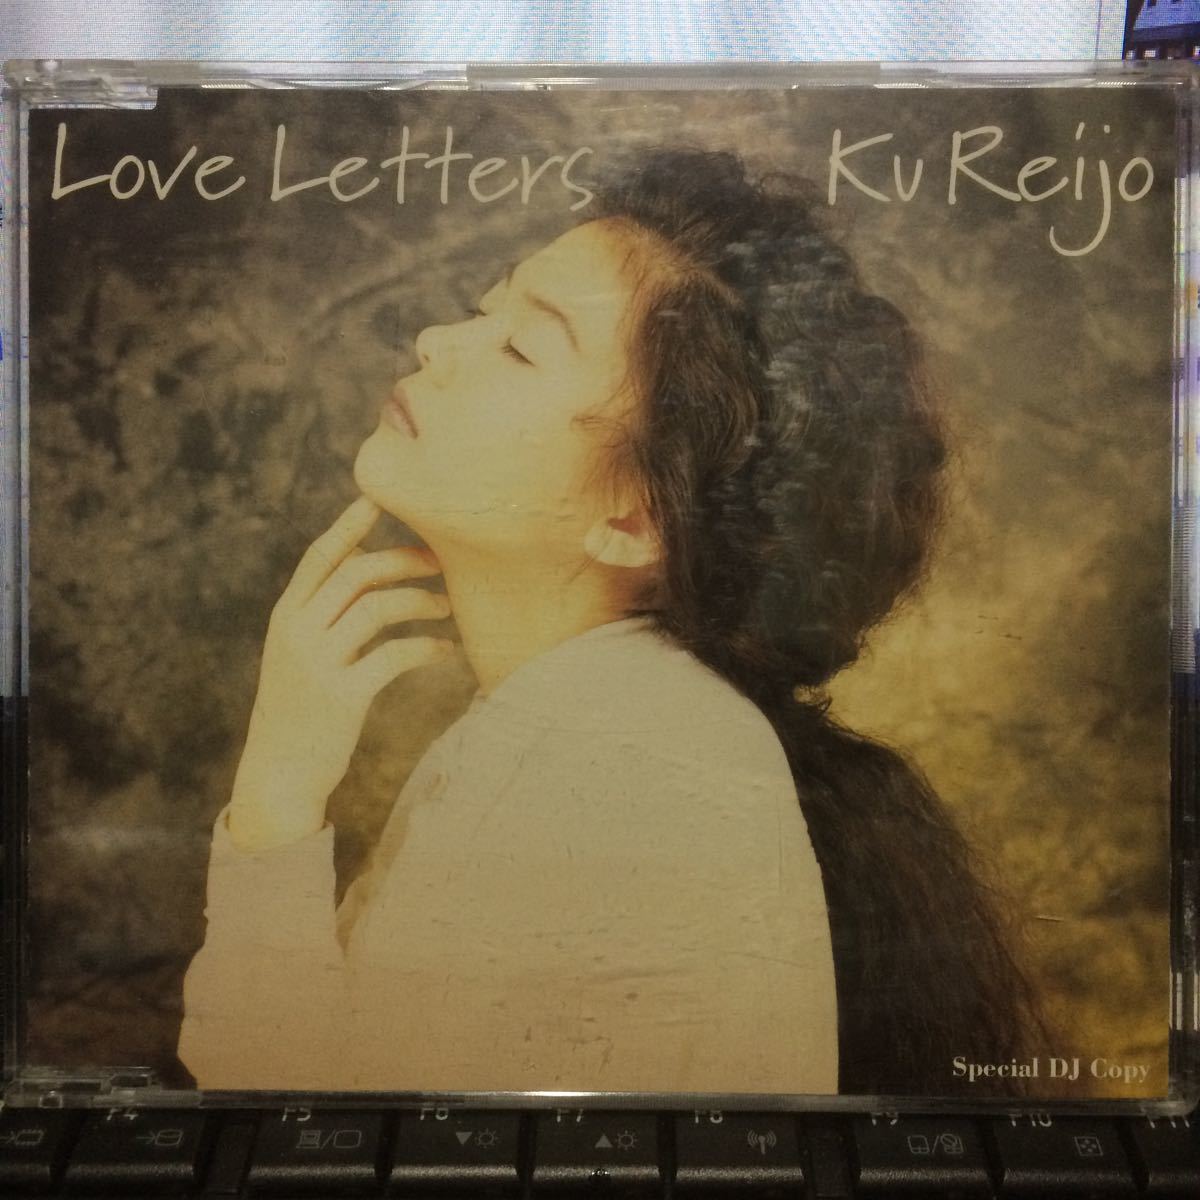  Kureijo Love Letters Special DJ Copy